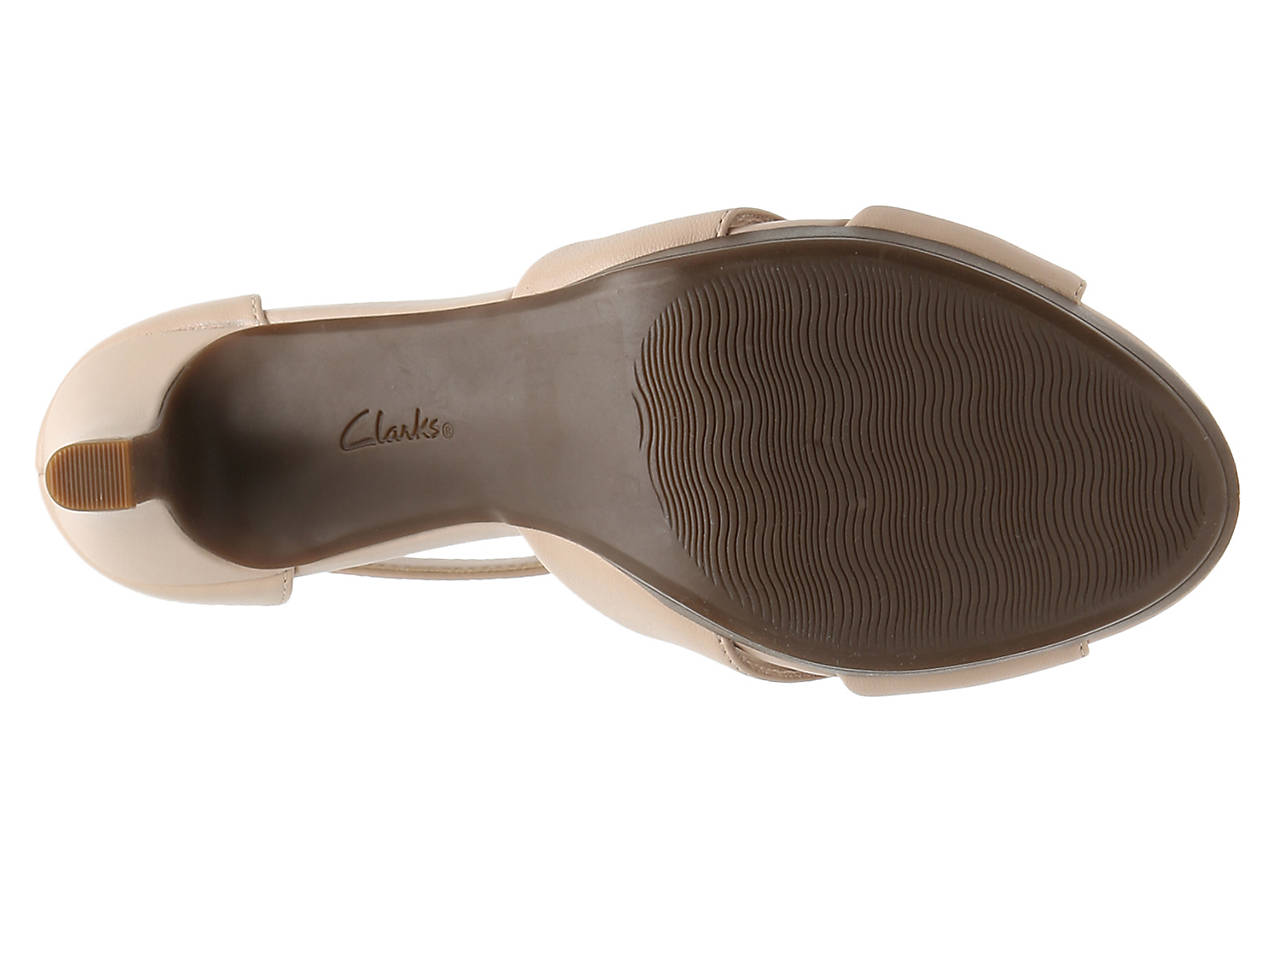 Clarks Adriel Cove Sandal Women's Shoes | DSW